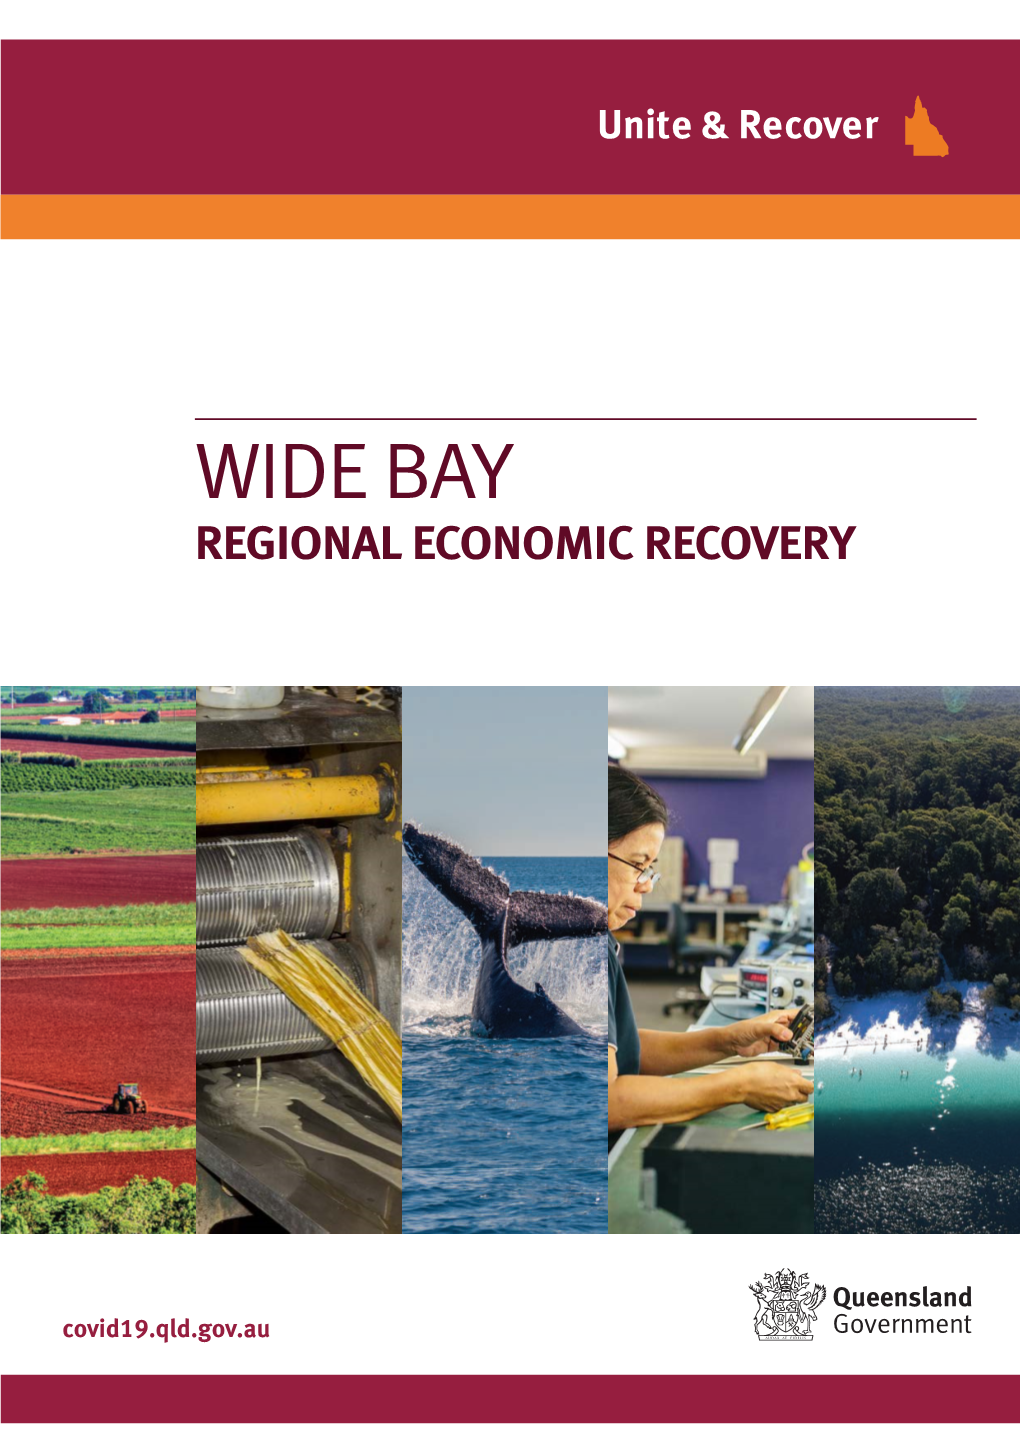 Wide Bay Regional Economic Recovery Plan